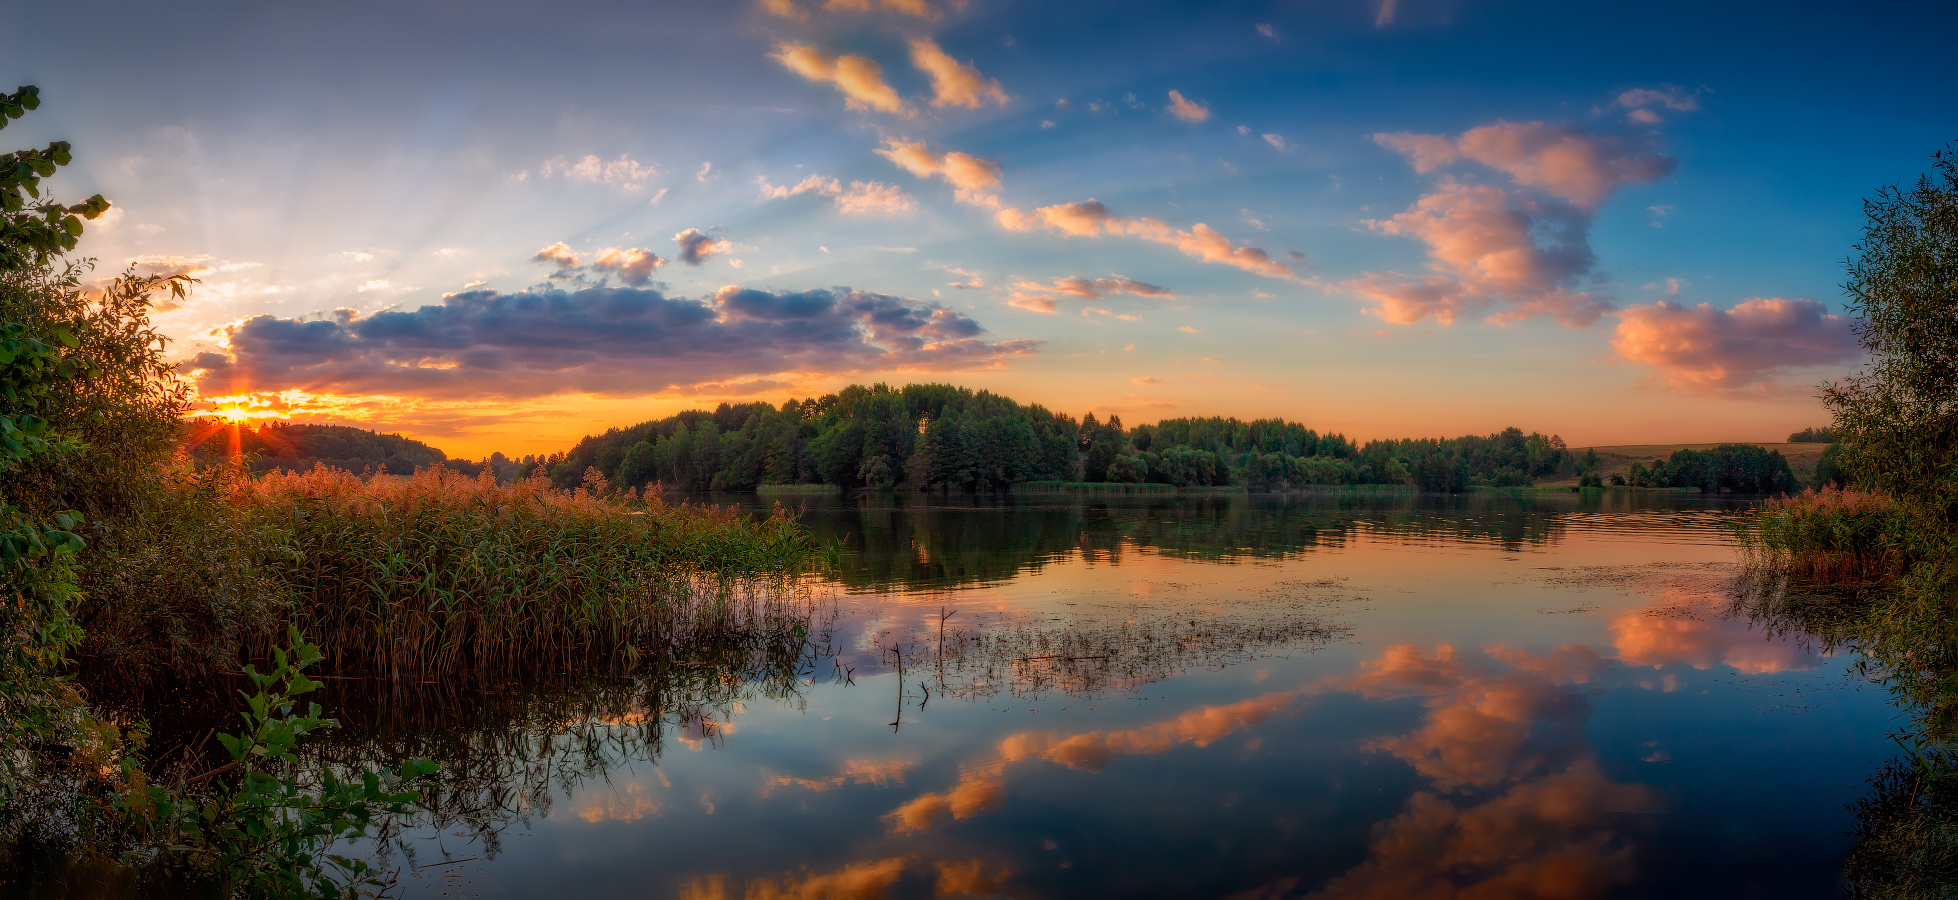 Багровый закат | Фотограф Сергей Шабуневич | foto.by фото.бай